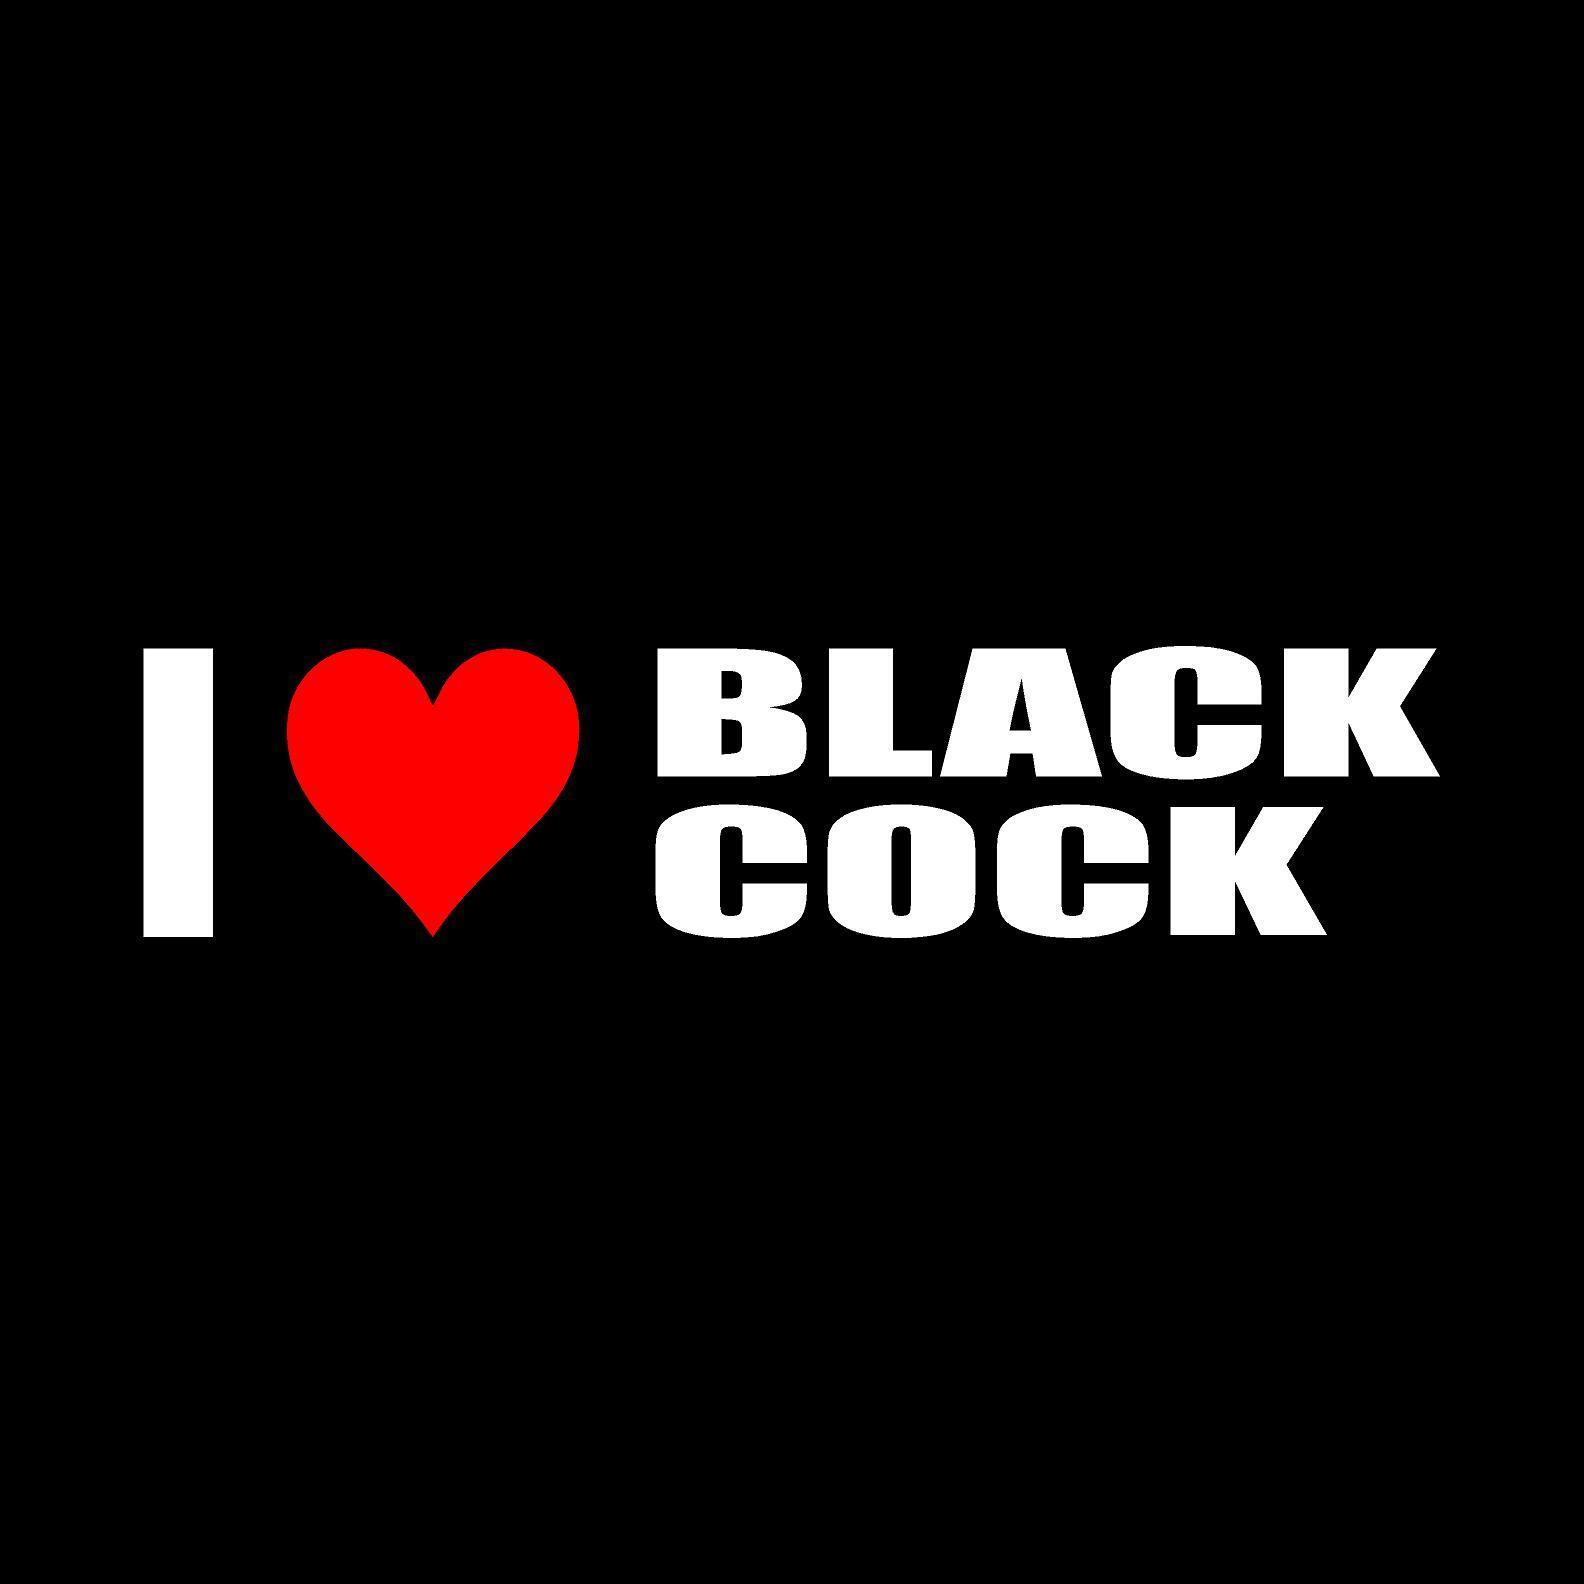 allison barone recommends we love black cock pic